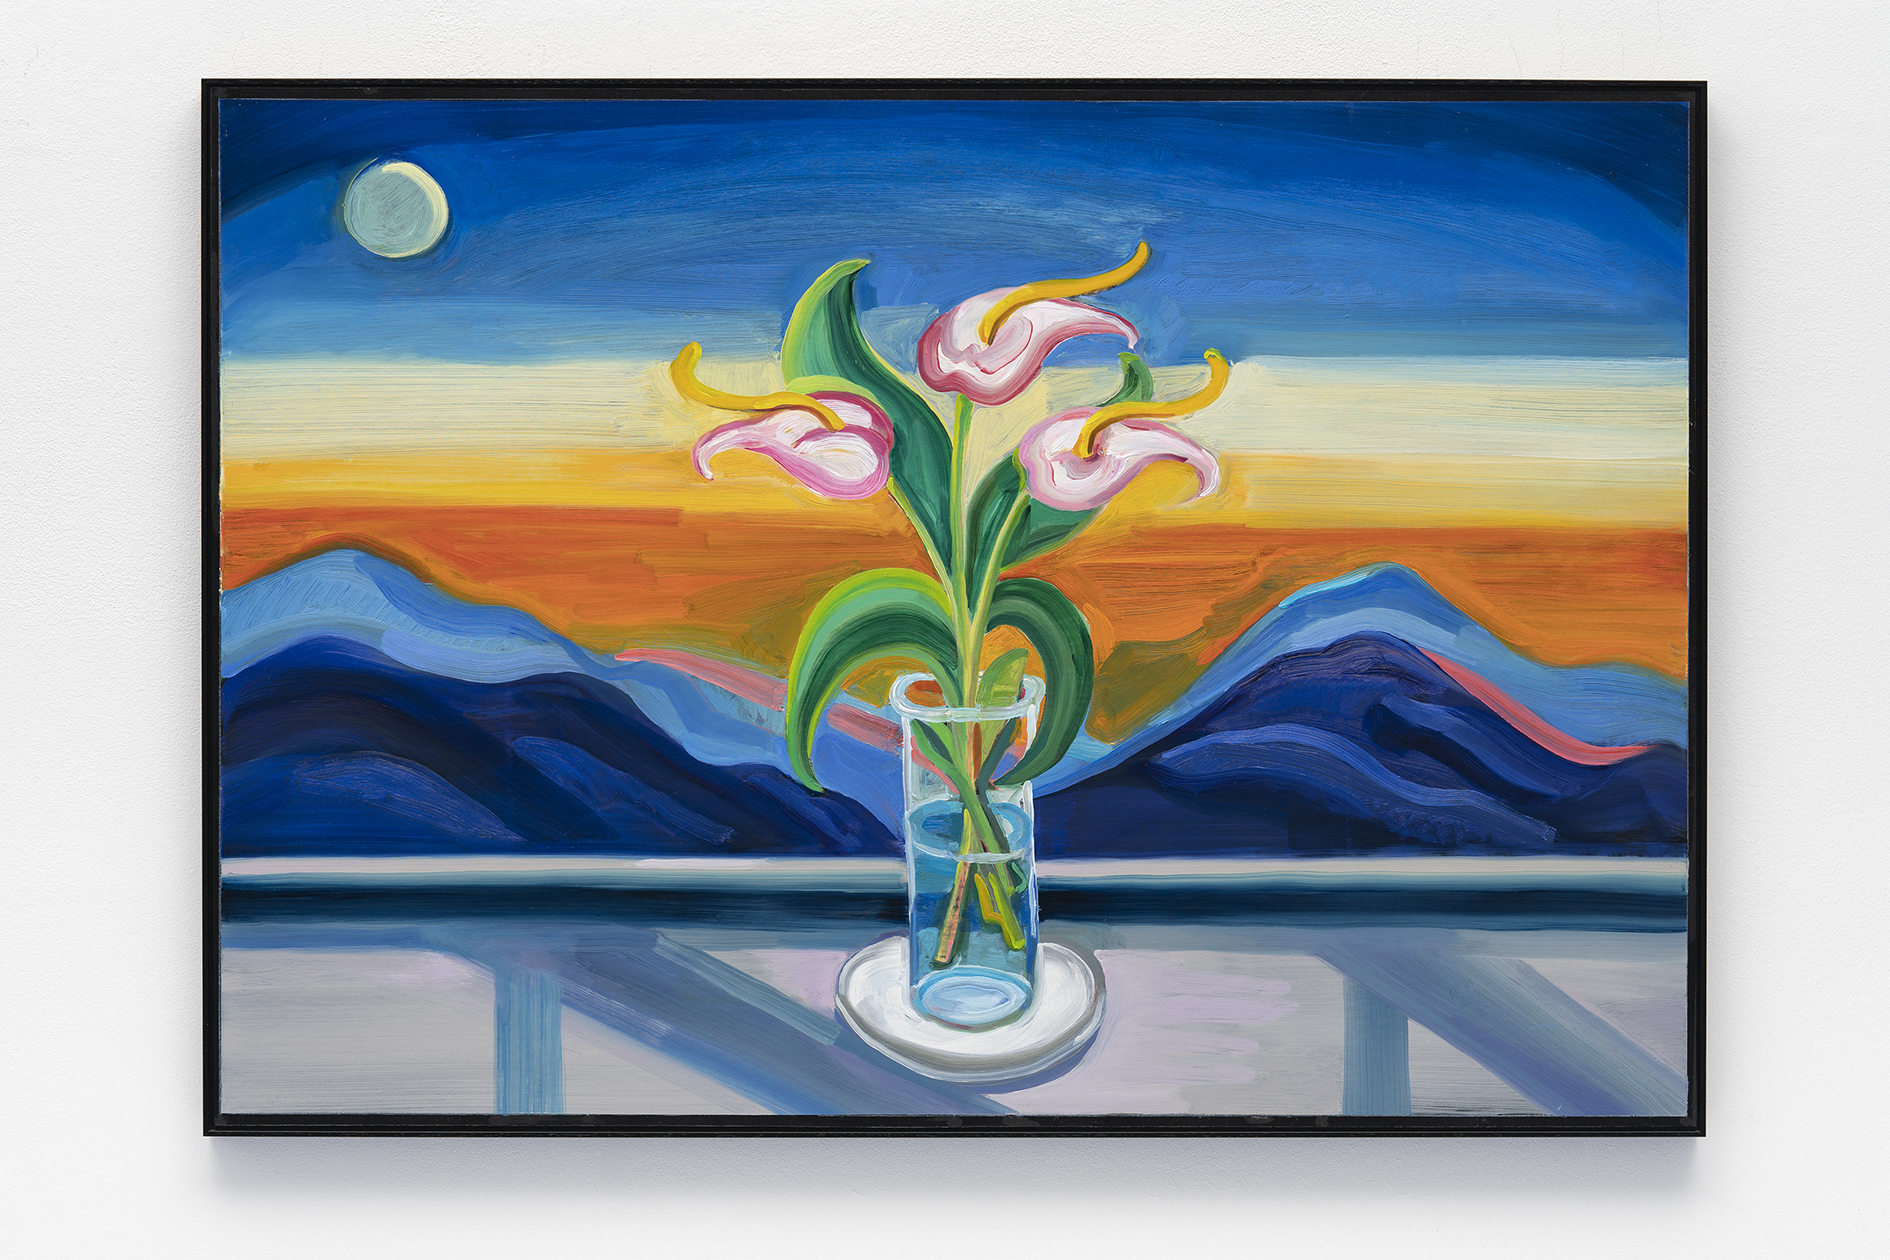 Olivia Parkes, Looking Glass, 2022 – Oil on rag board, 73 x 103.5 x 2.5 cm